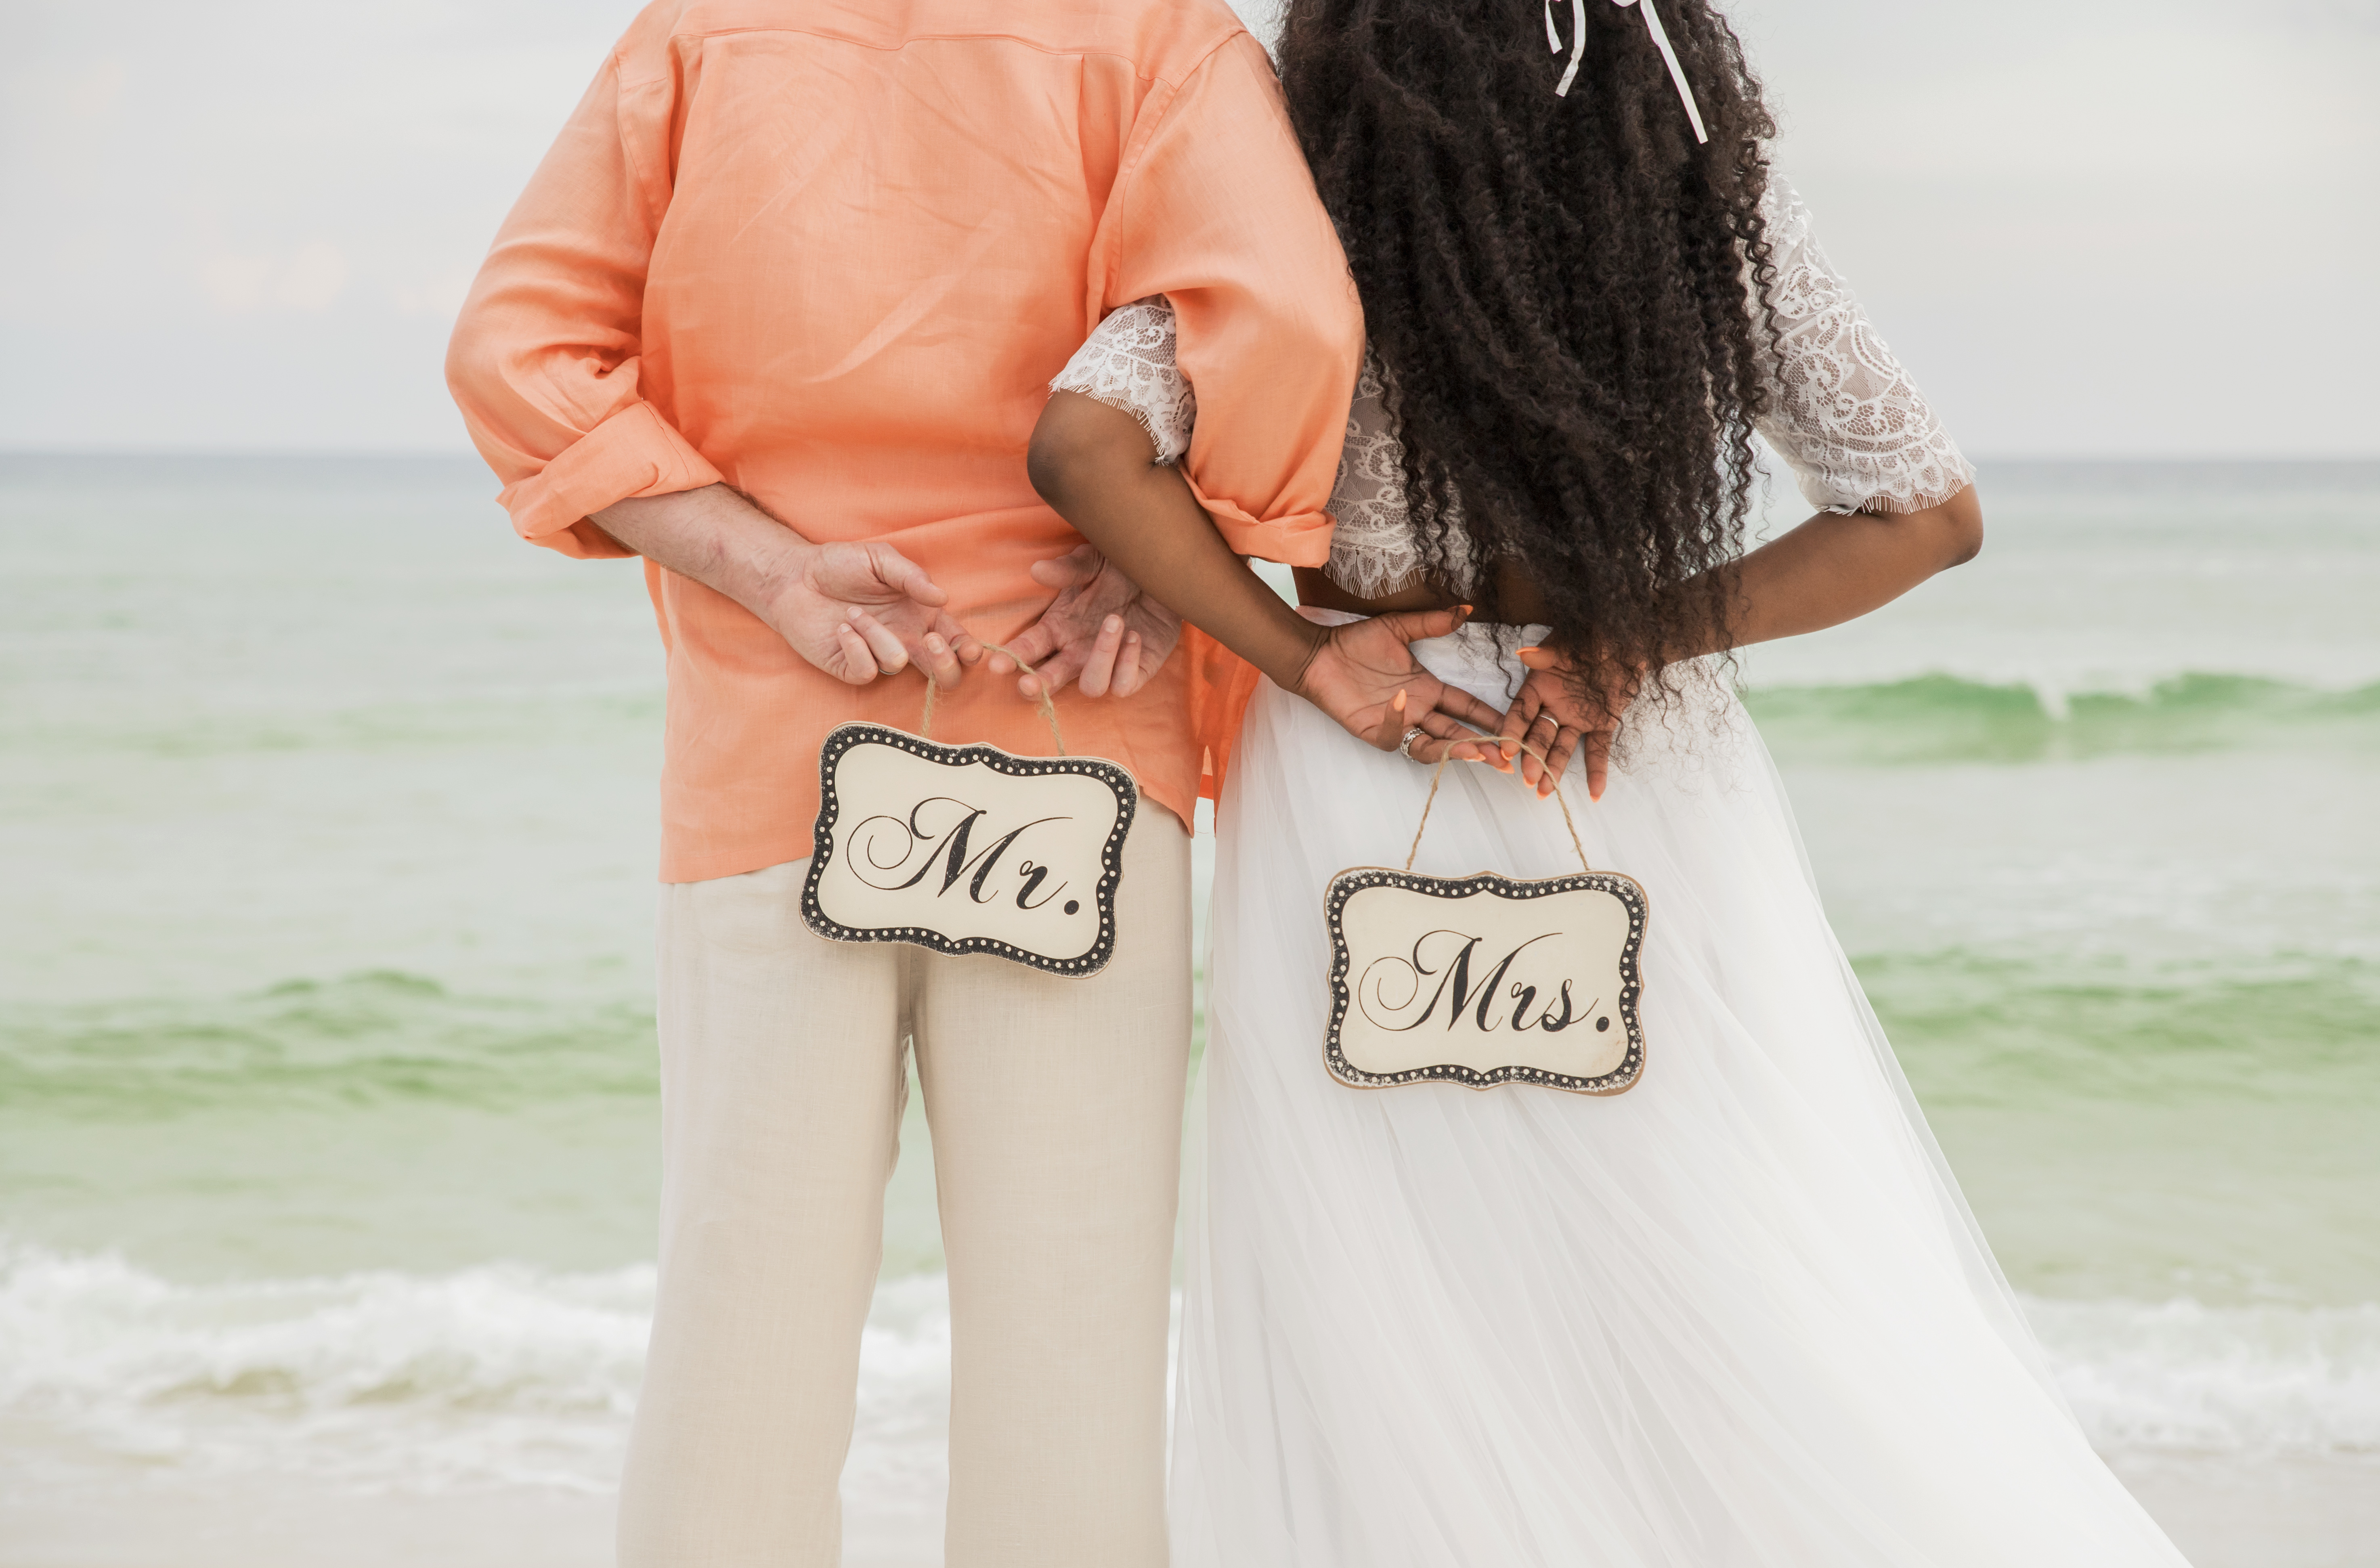 Destin Florida Simple Barefoot Beach Weddings, Elopements & Vow Renewals